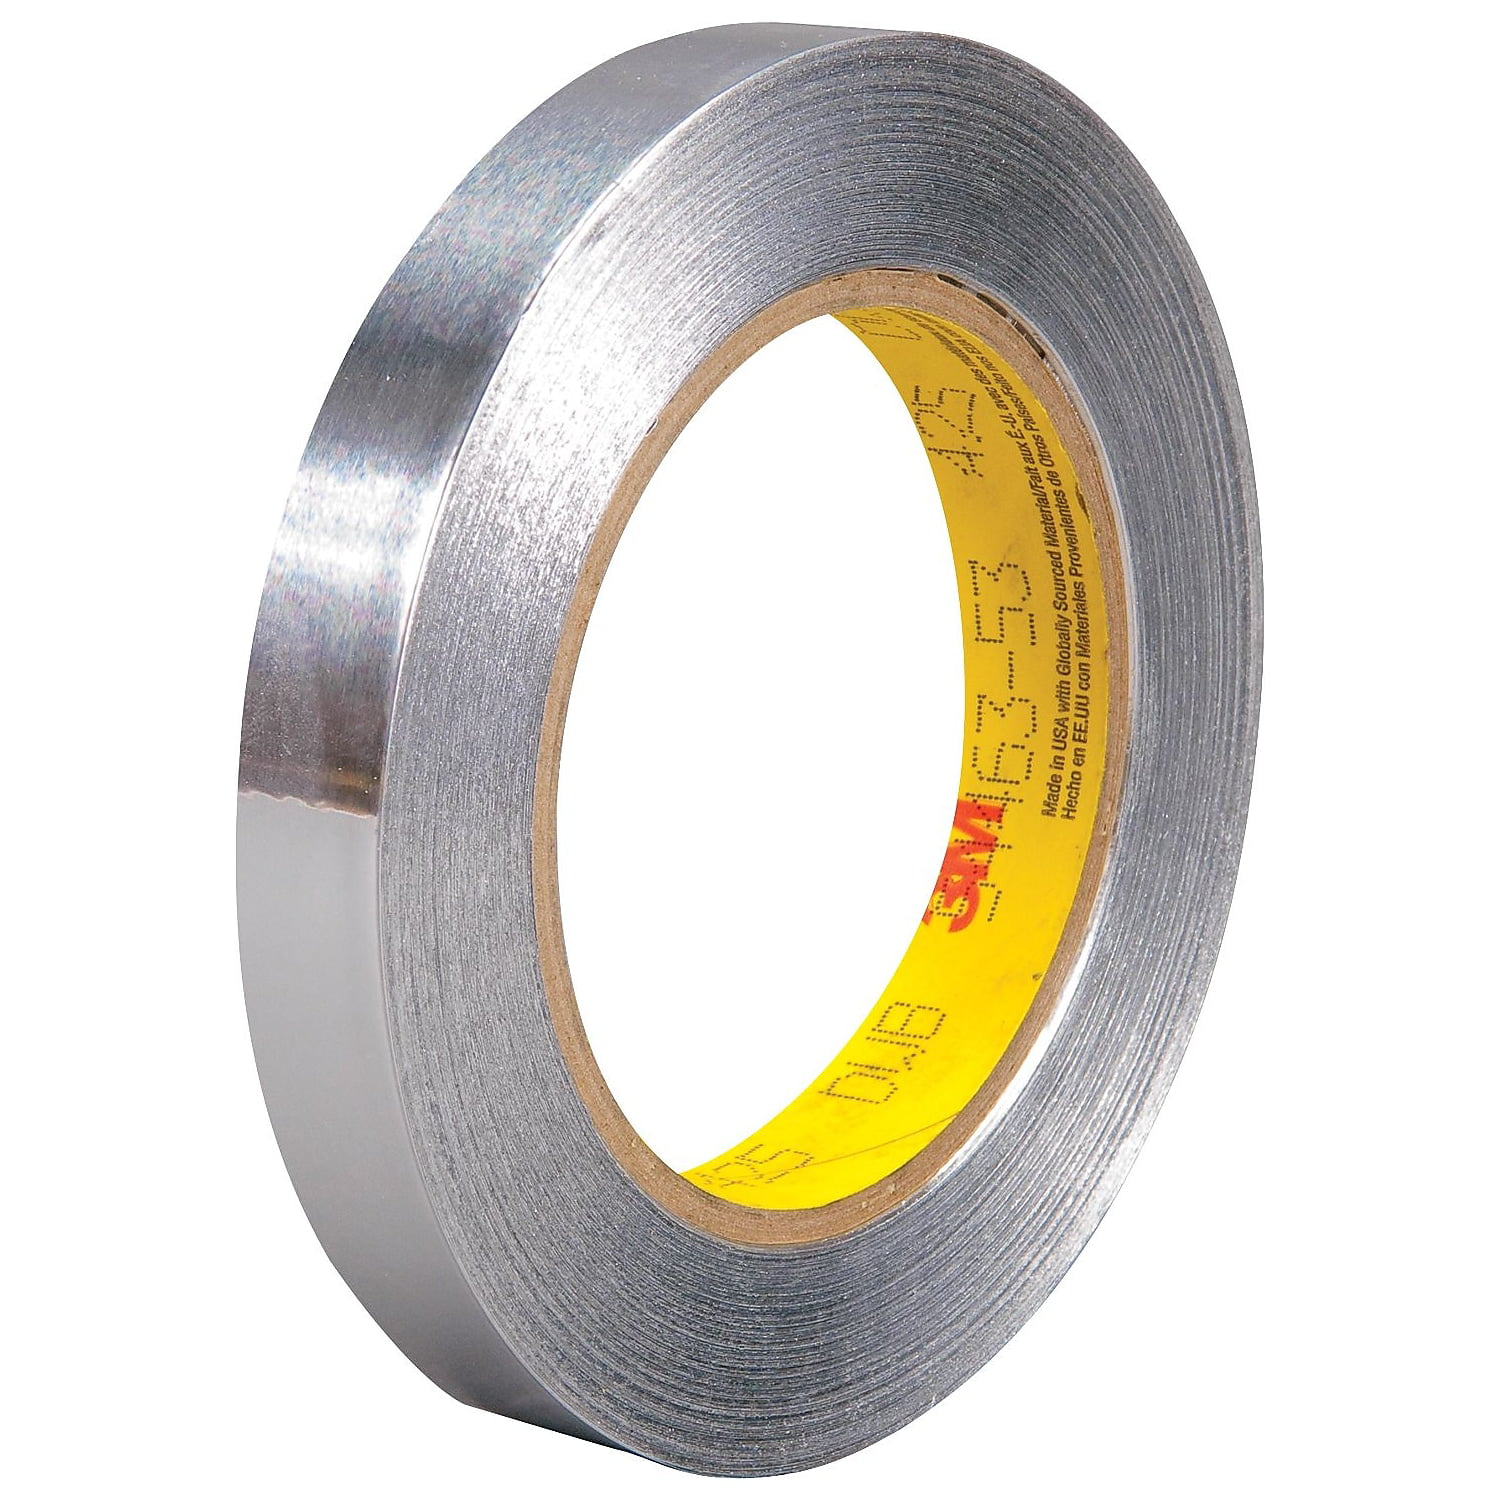 T9634251pk 0.50 In. X 60 Yards Aluminum Foil Tape, Silver